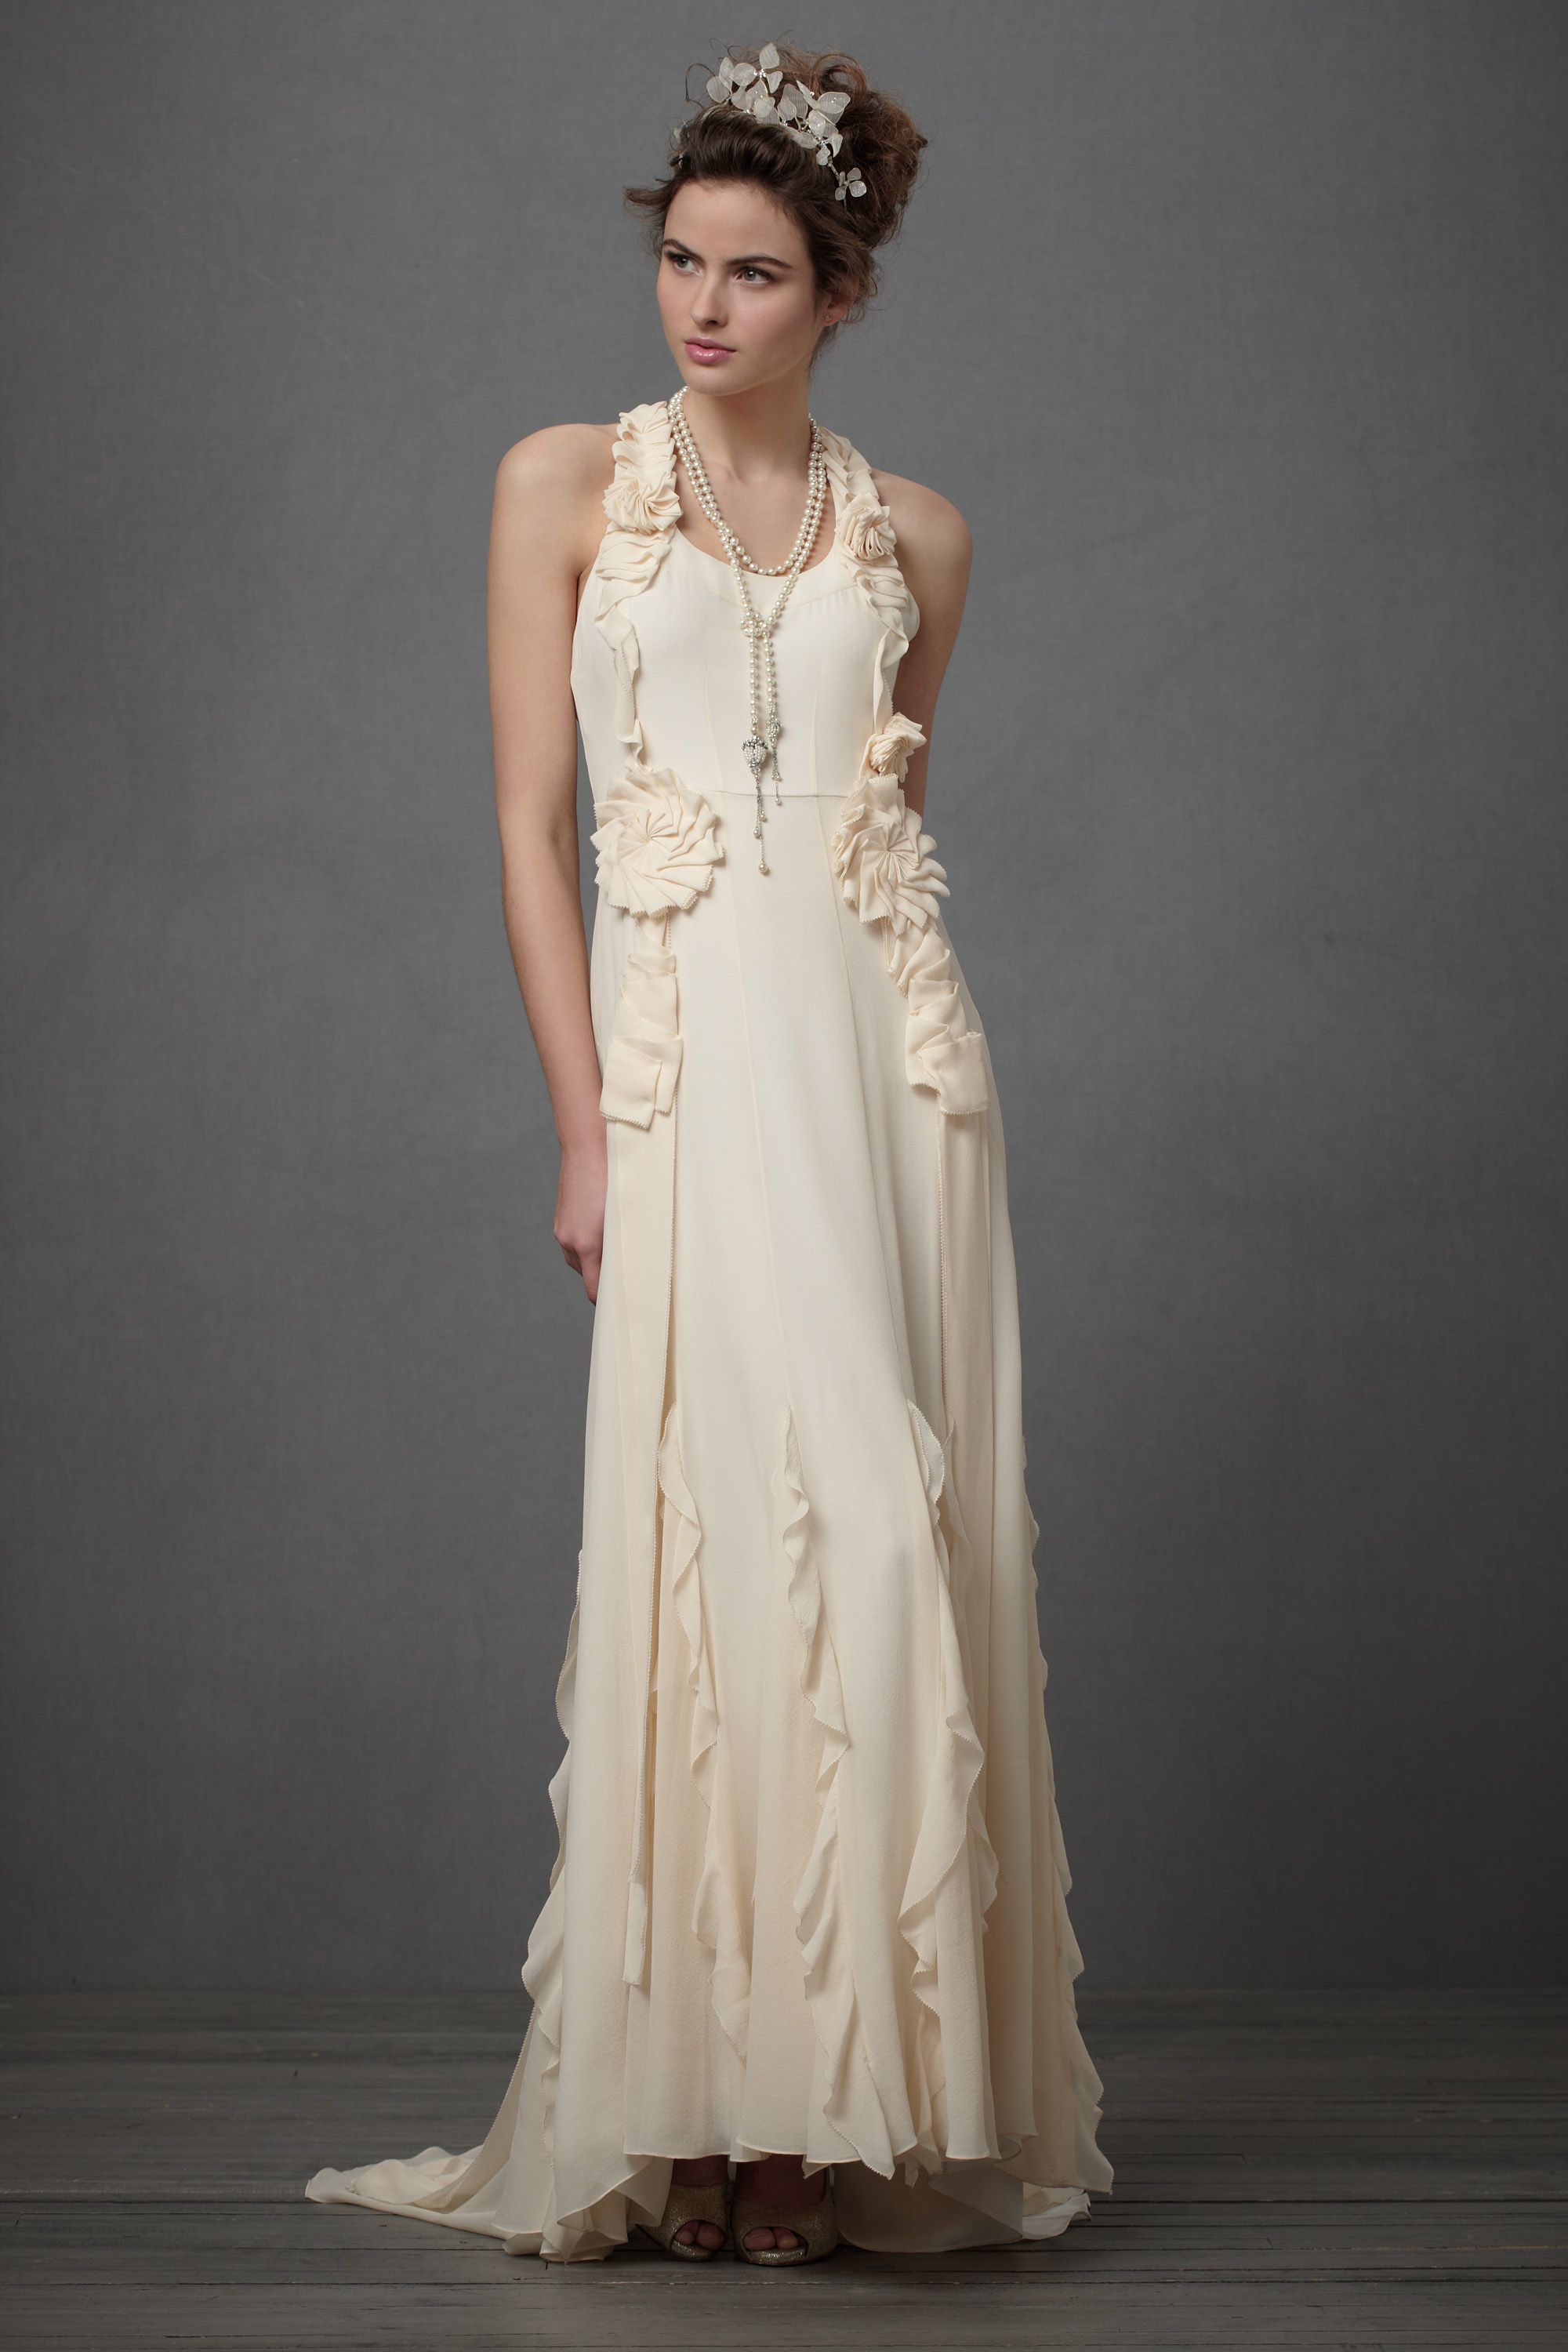 Avante-Garde Gown in Bride | BHLDN